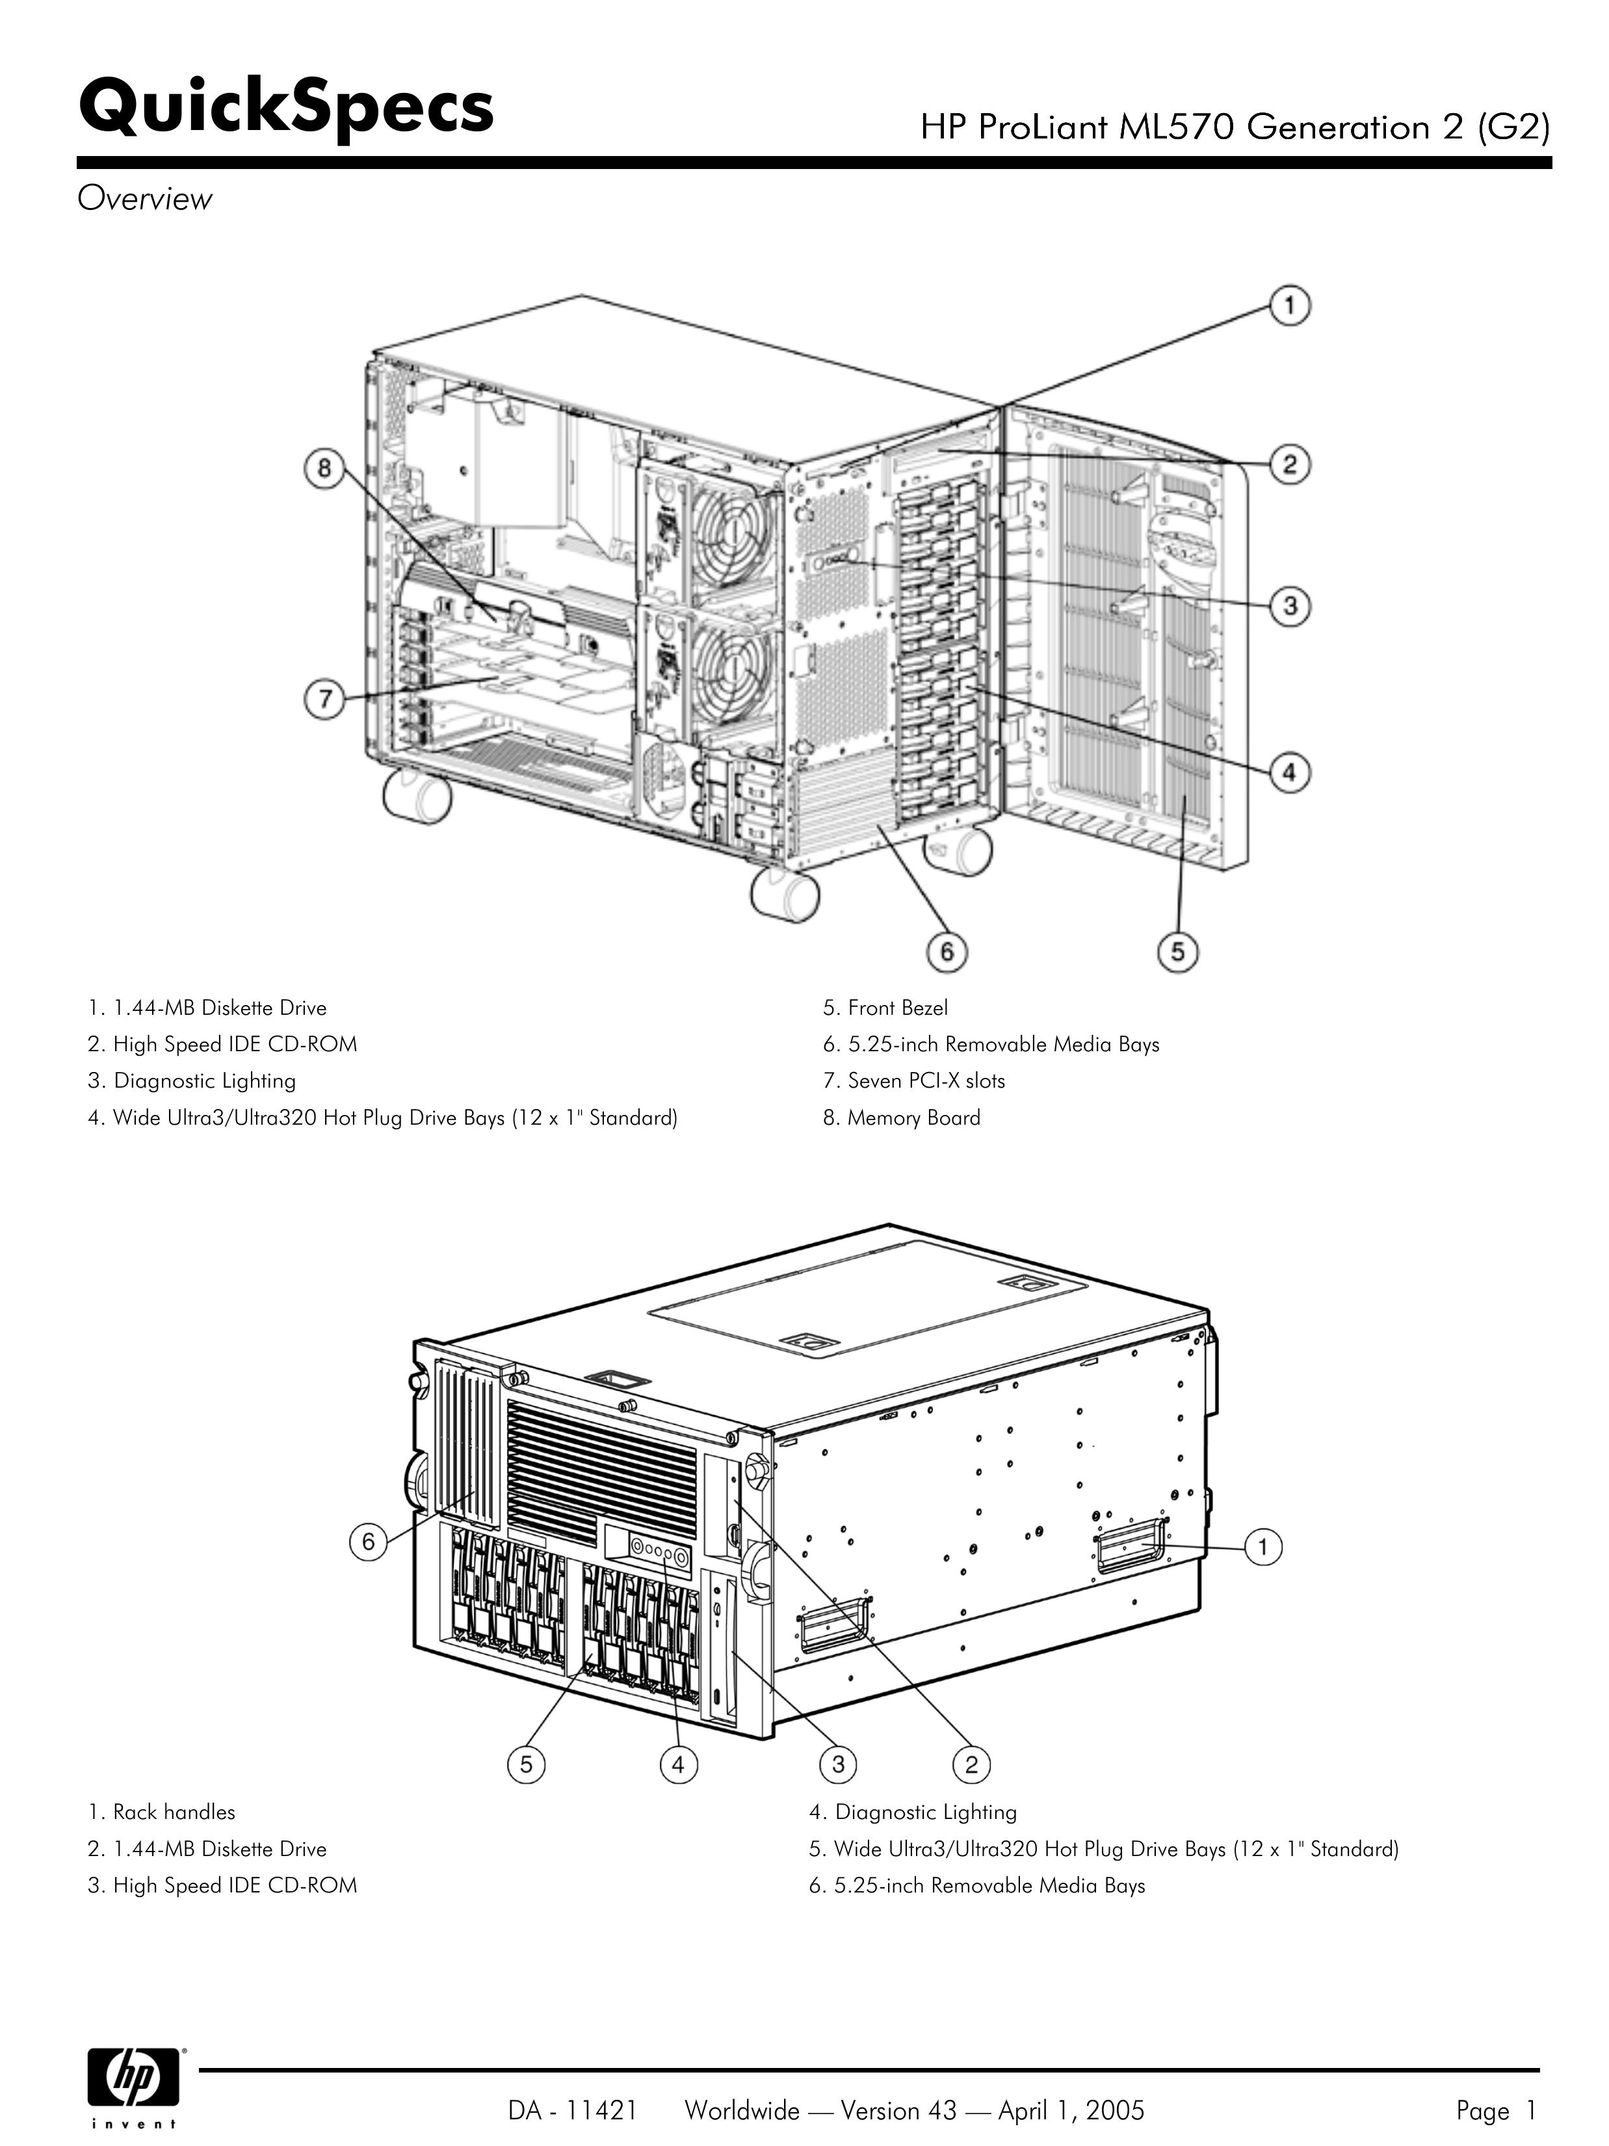 HP (Hewlett-Packard) ML570 Video Game Console User Manual